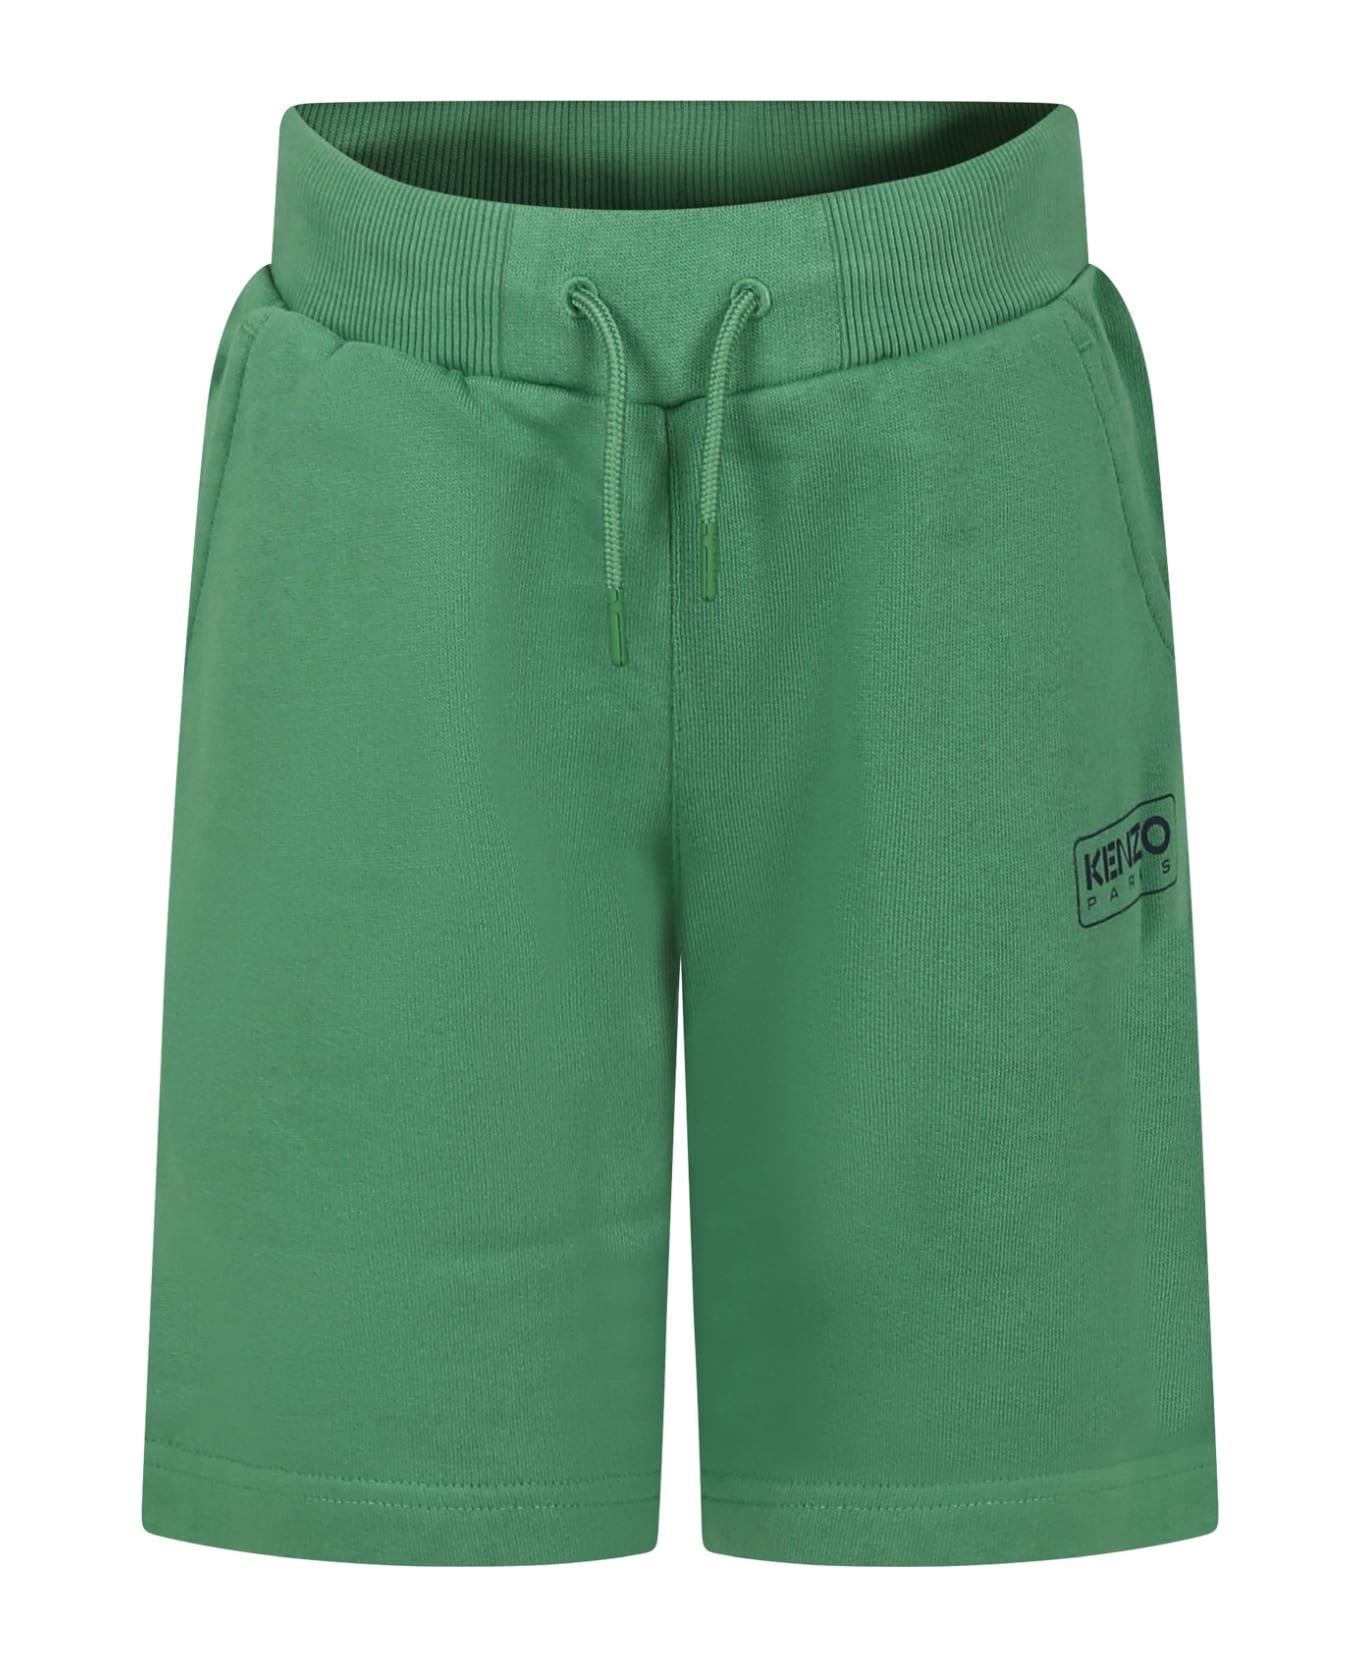 Kenzo Kids Green Shorts For Boy With Logo Print - F Menta Verde